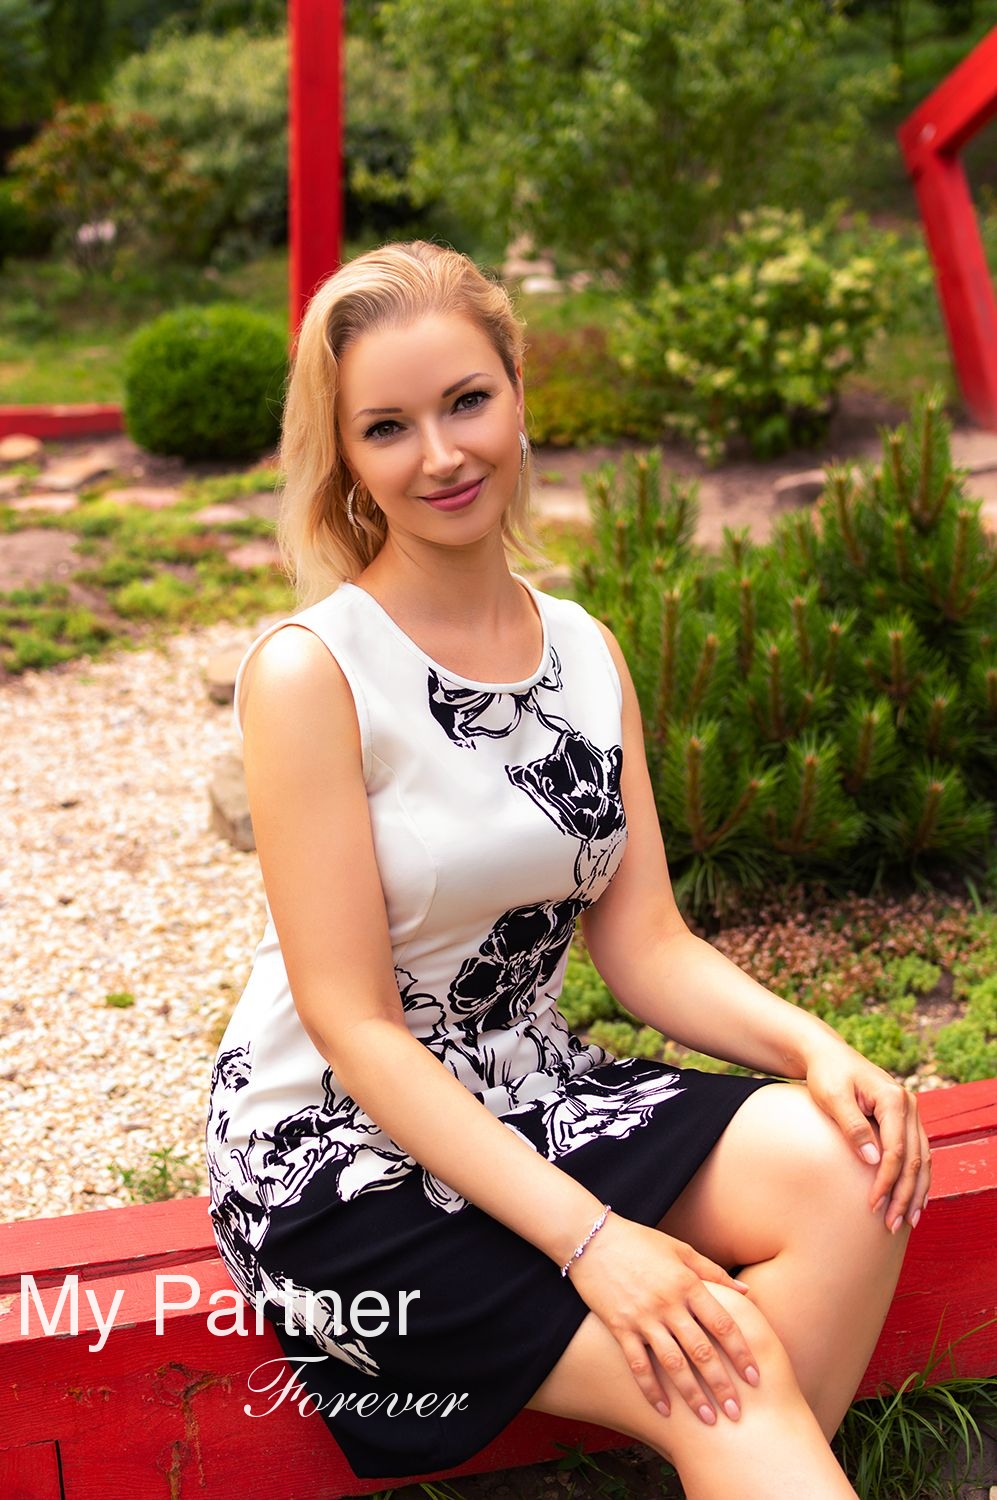 Dating Service to Meet Single Ukrainian Woman Nadezhda from Kiev, Ukraine